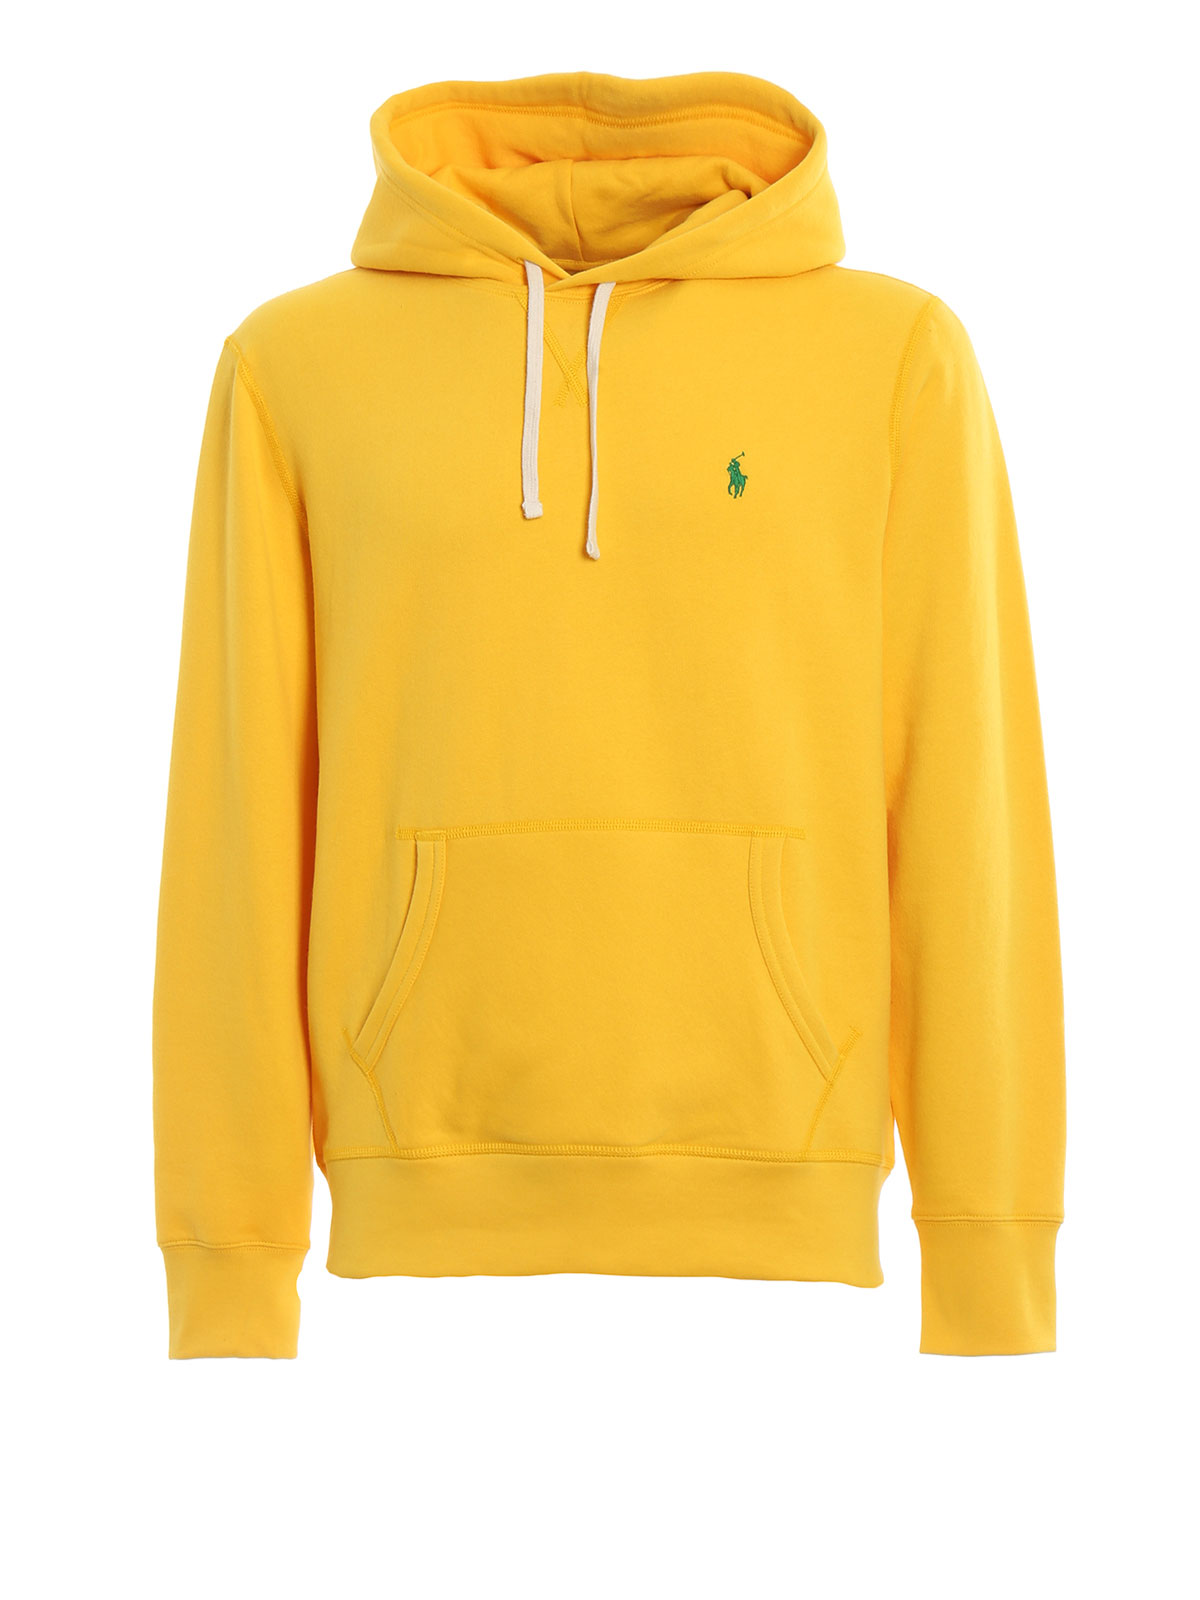 polo ralph lauren hoodie yellow - 53 